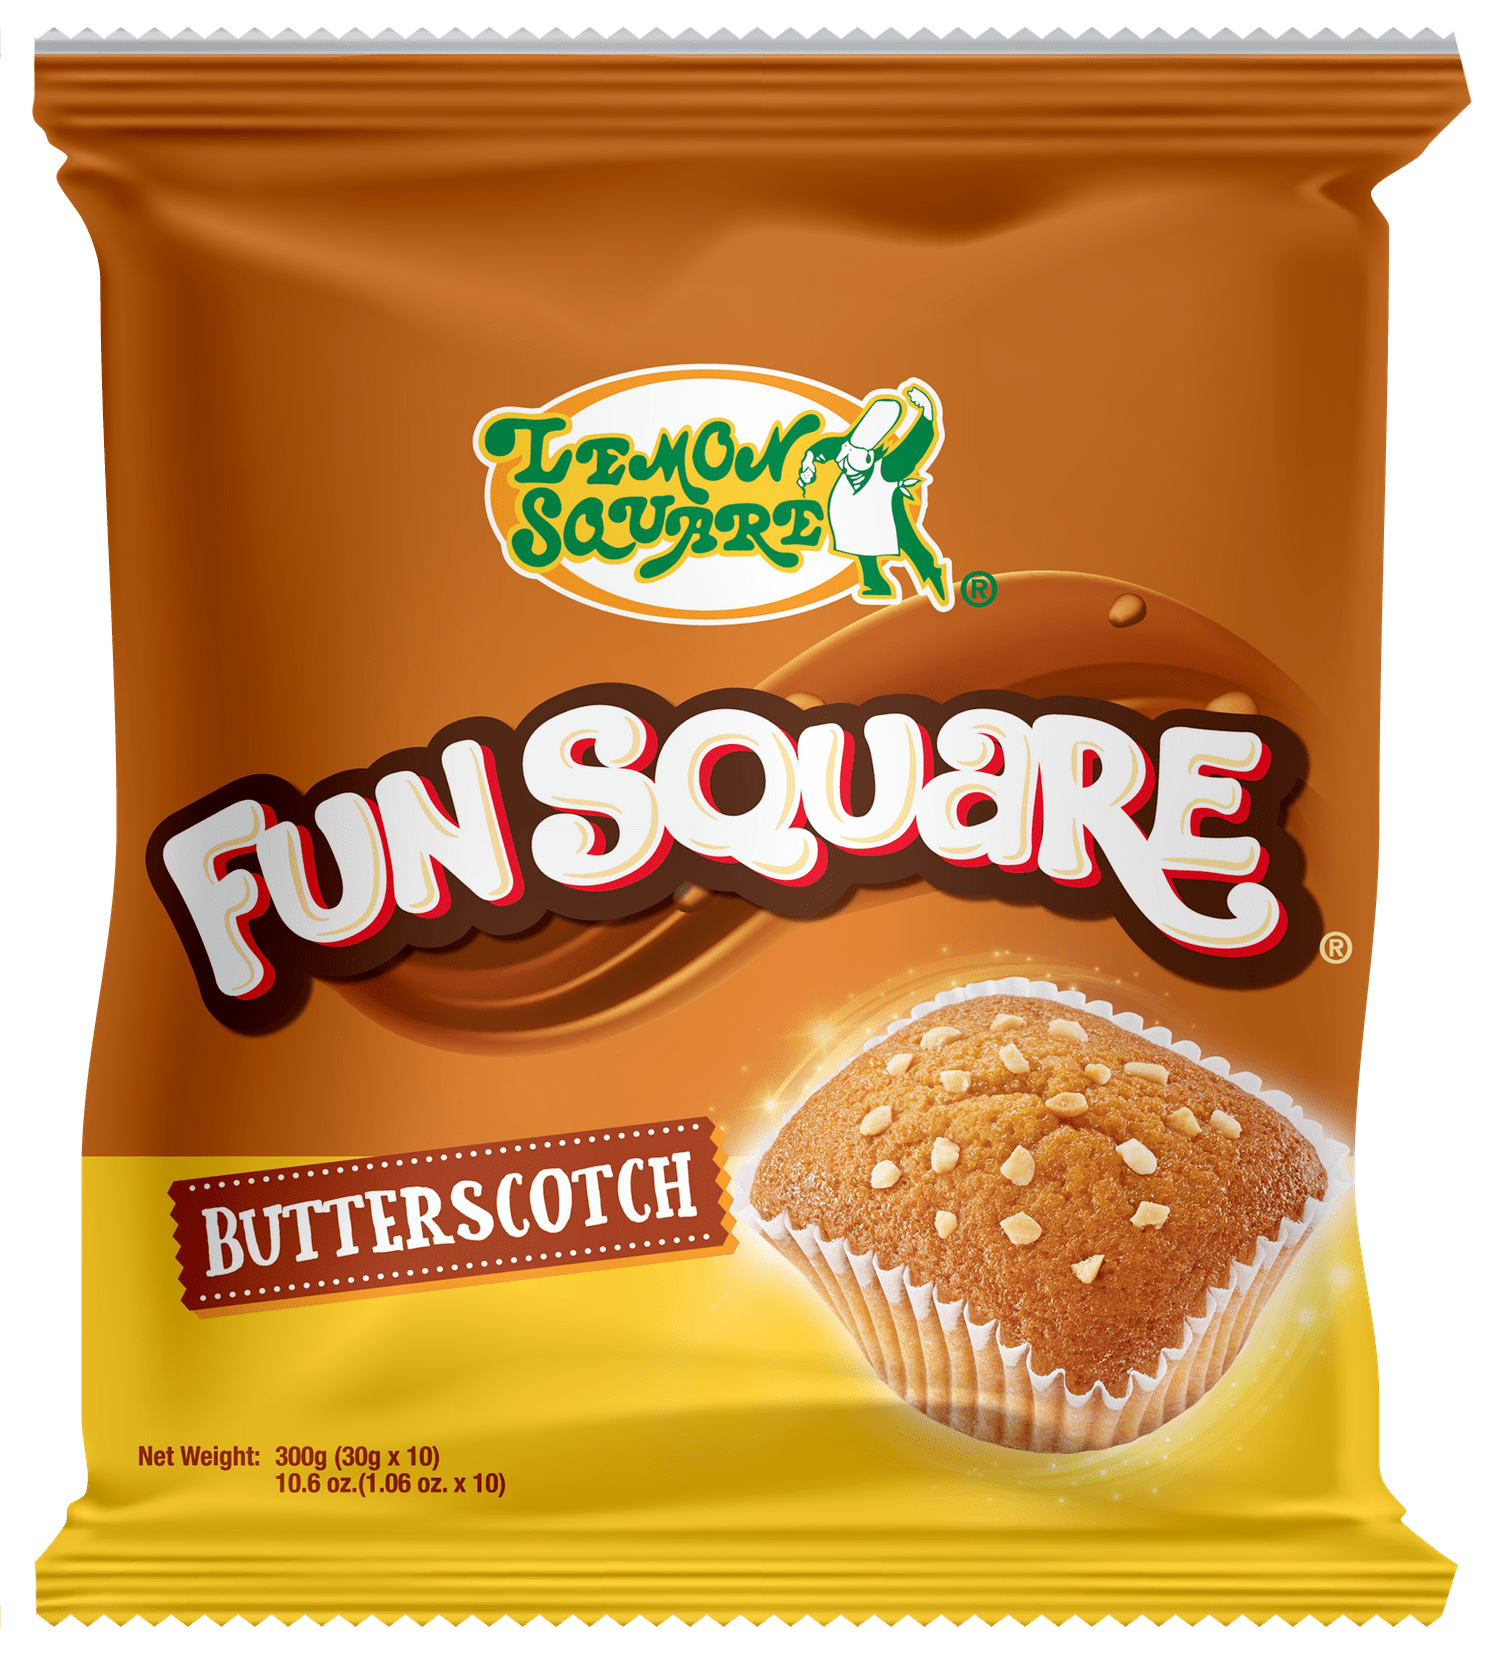 Lemon Square Fun Square Butterscotch Outer